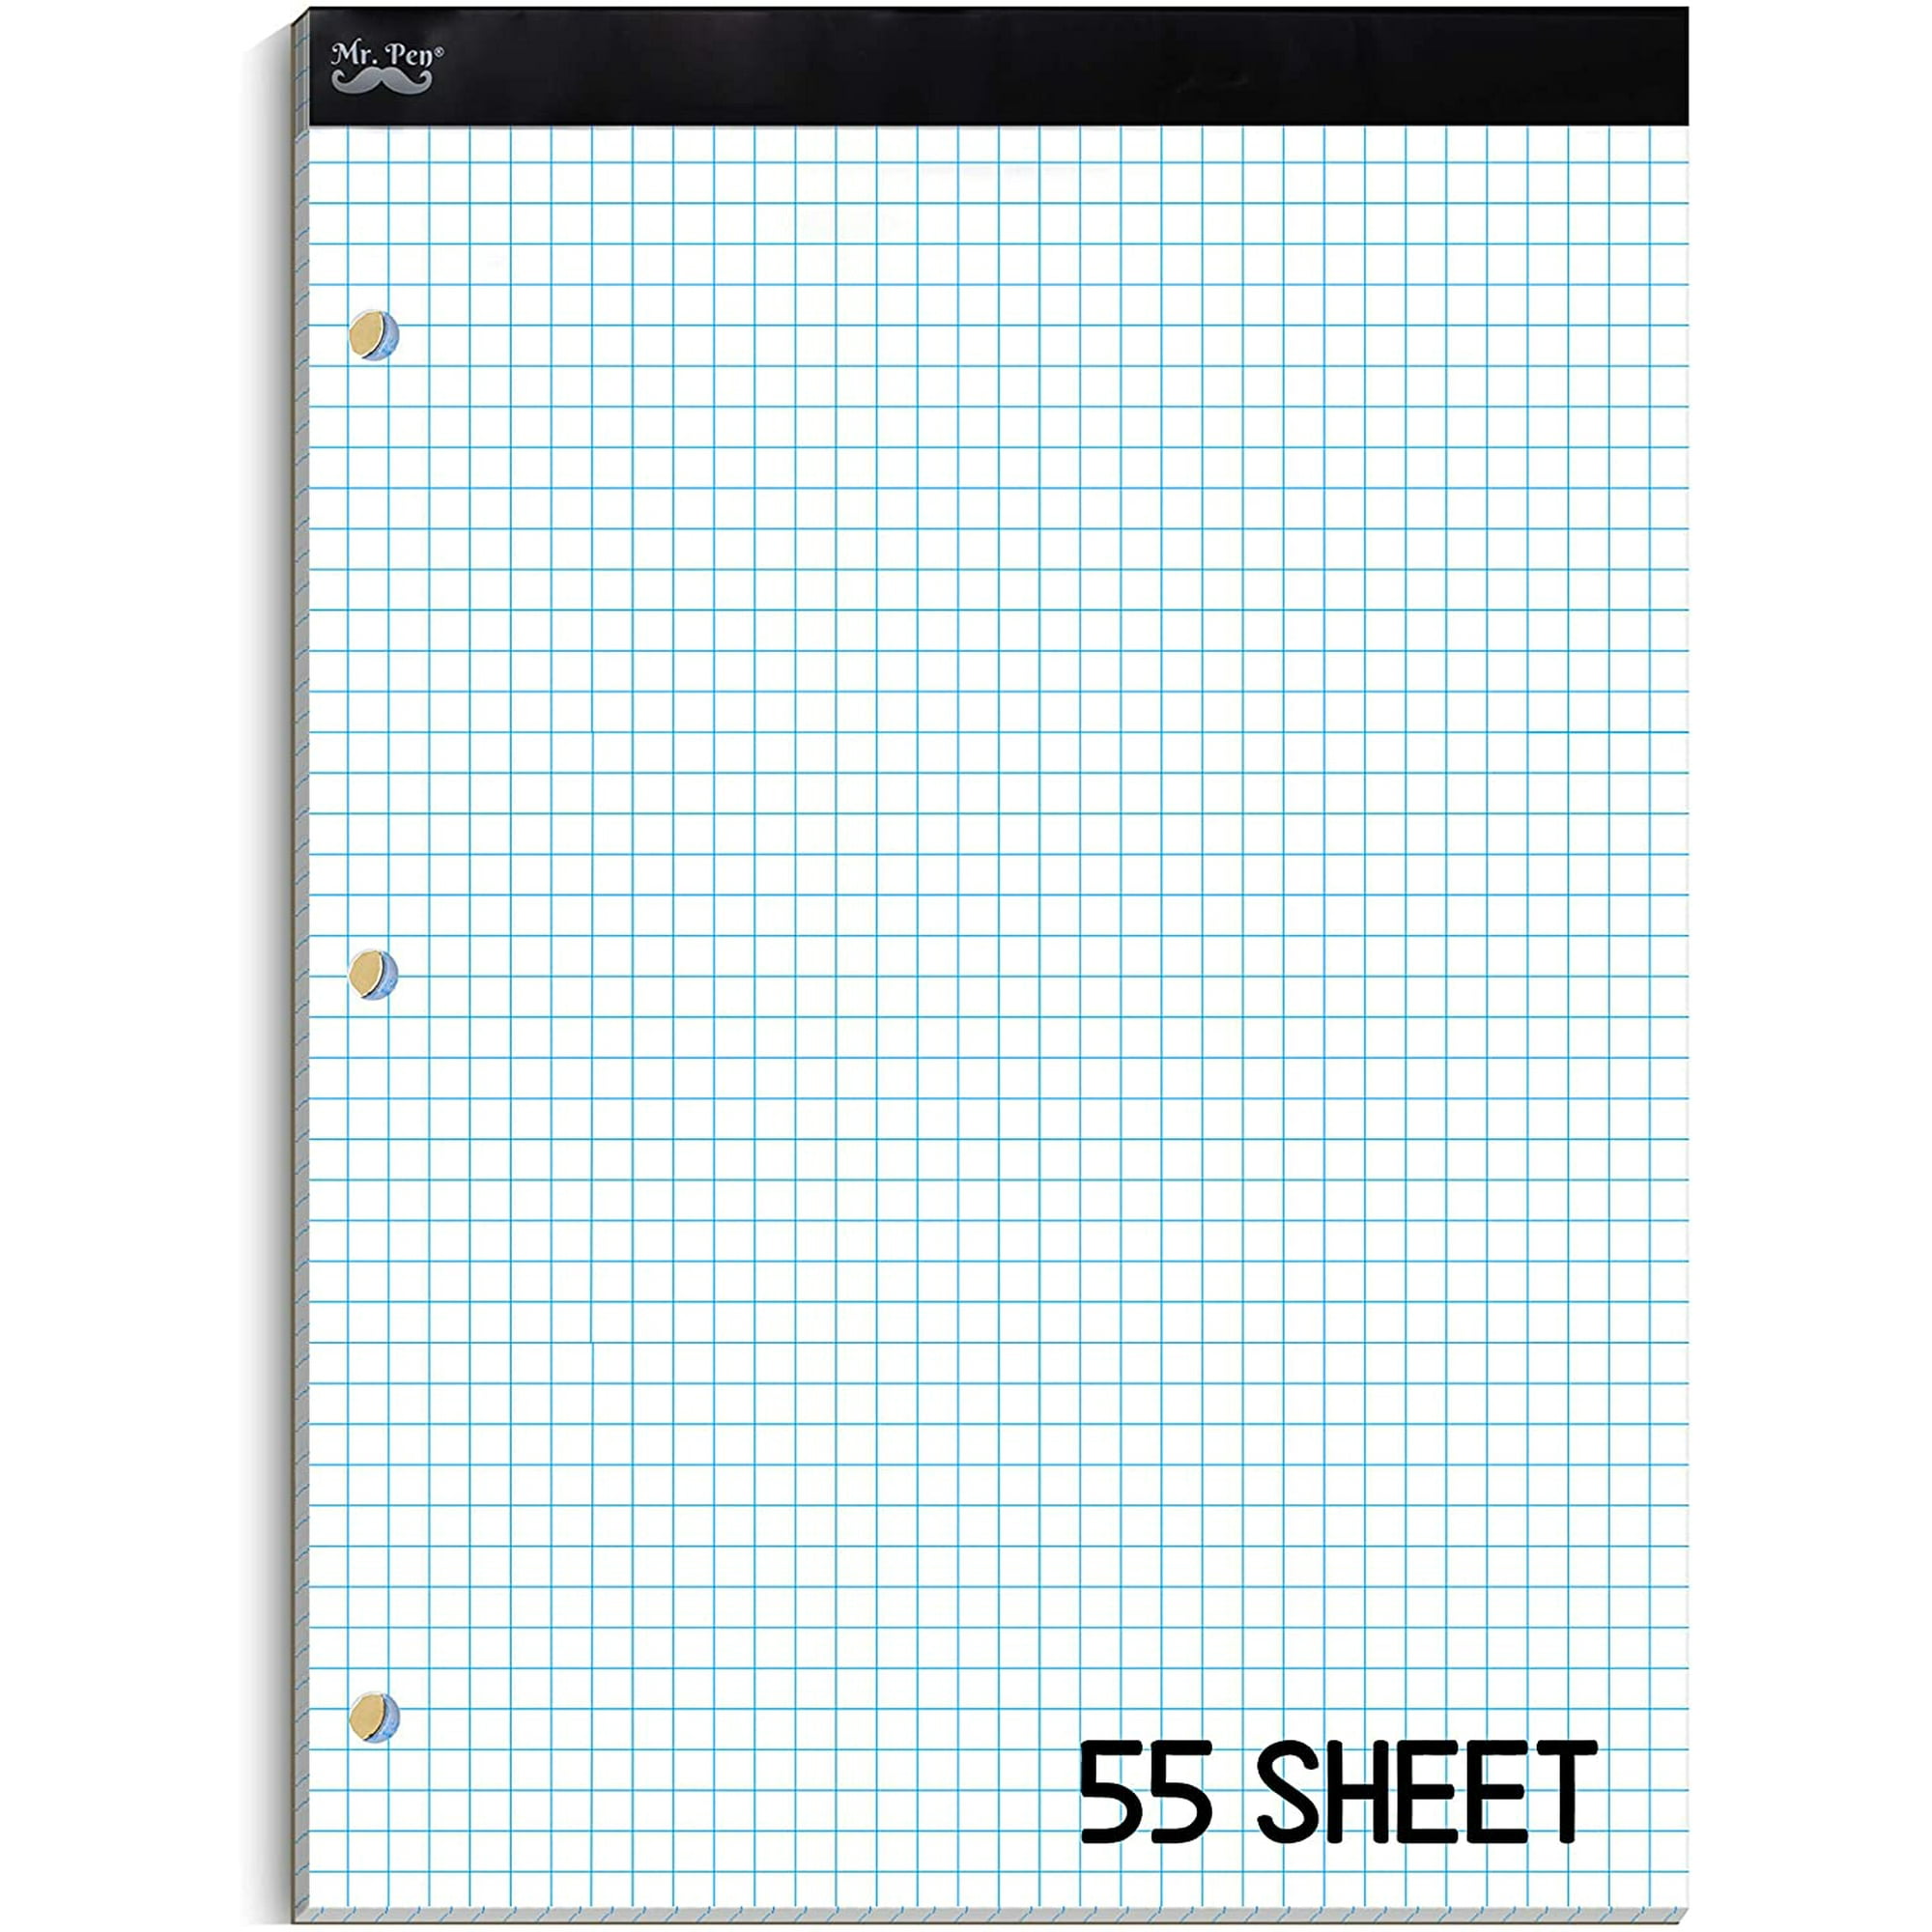 square grid paper a4